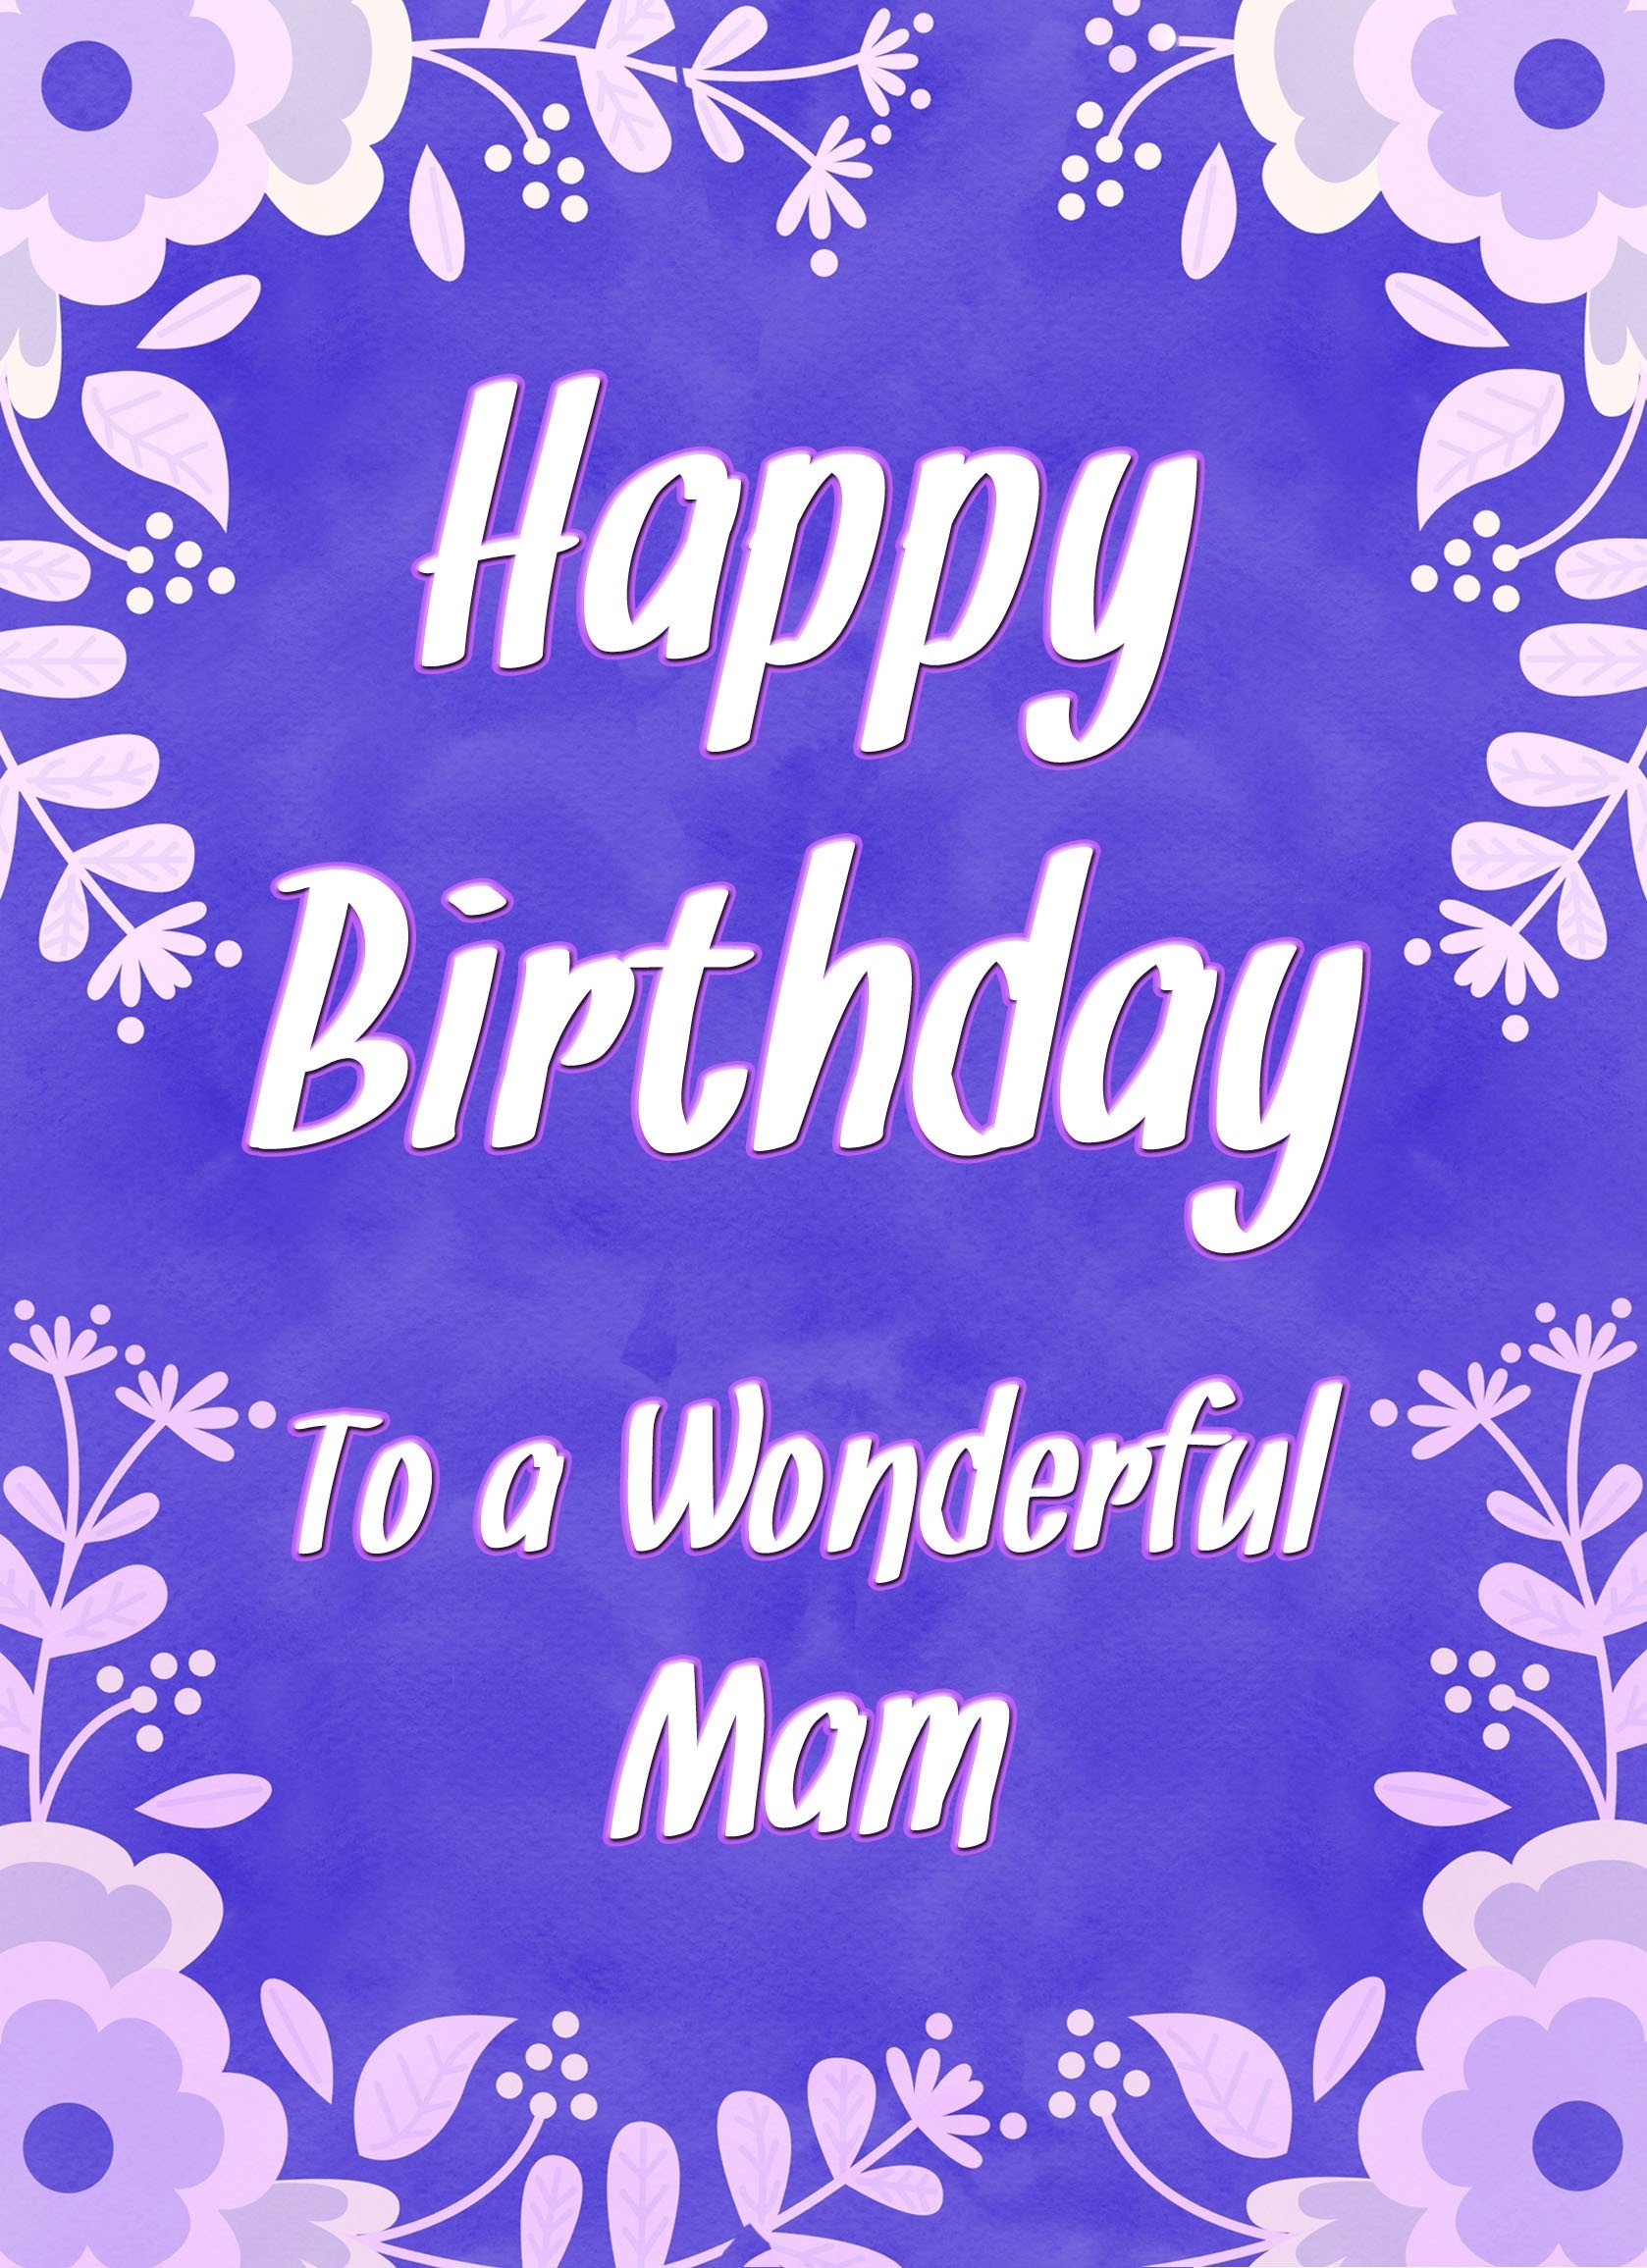 Birthday Card For Wonderful Mam (Purple Border)